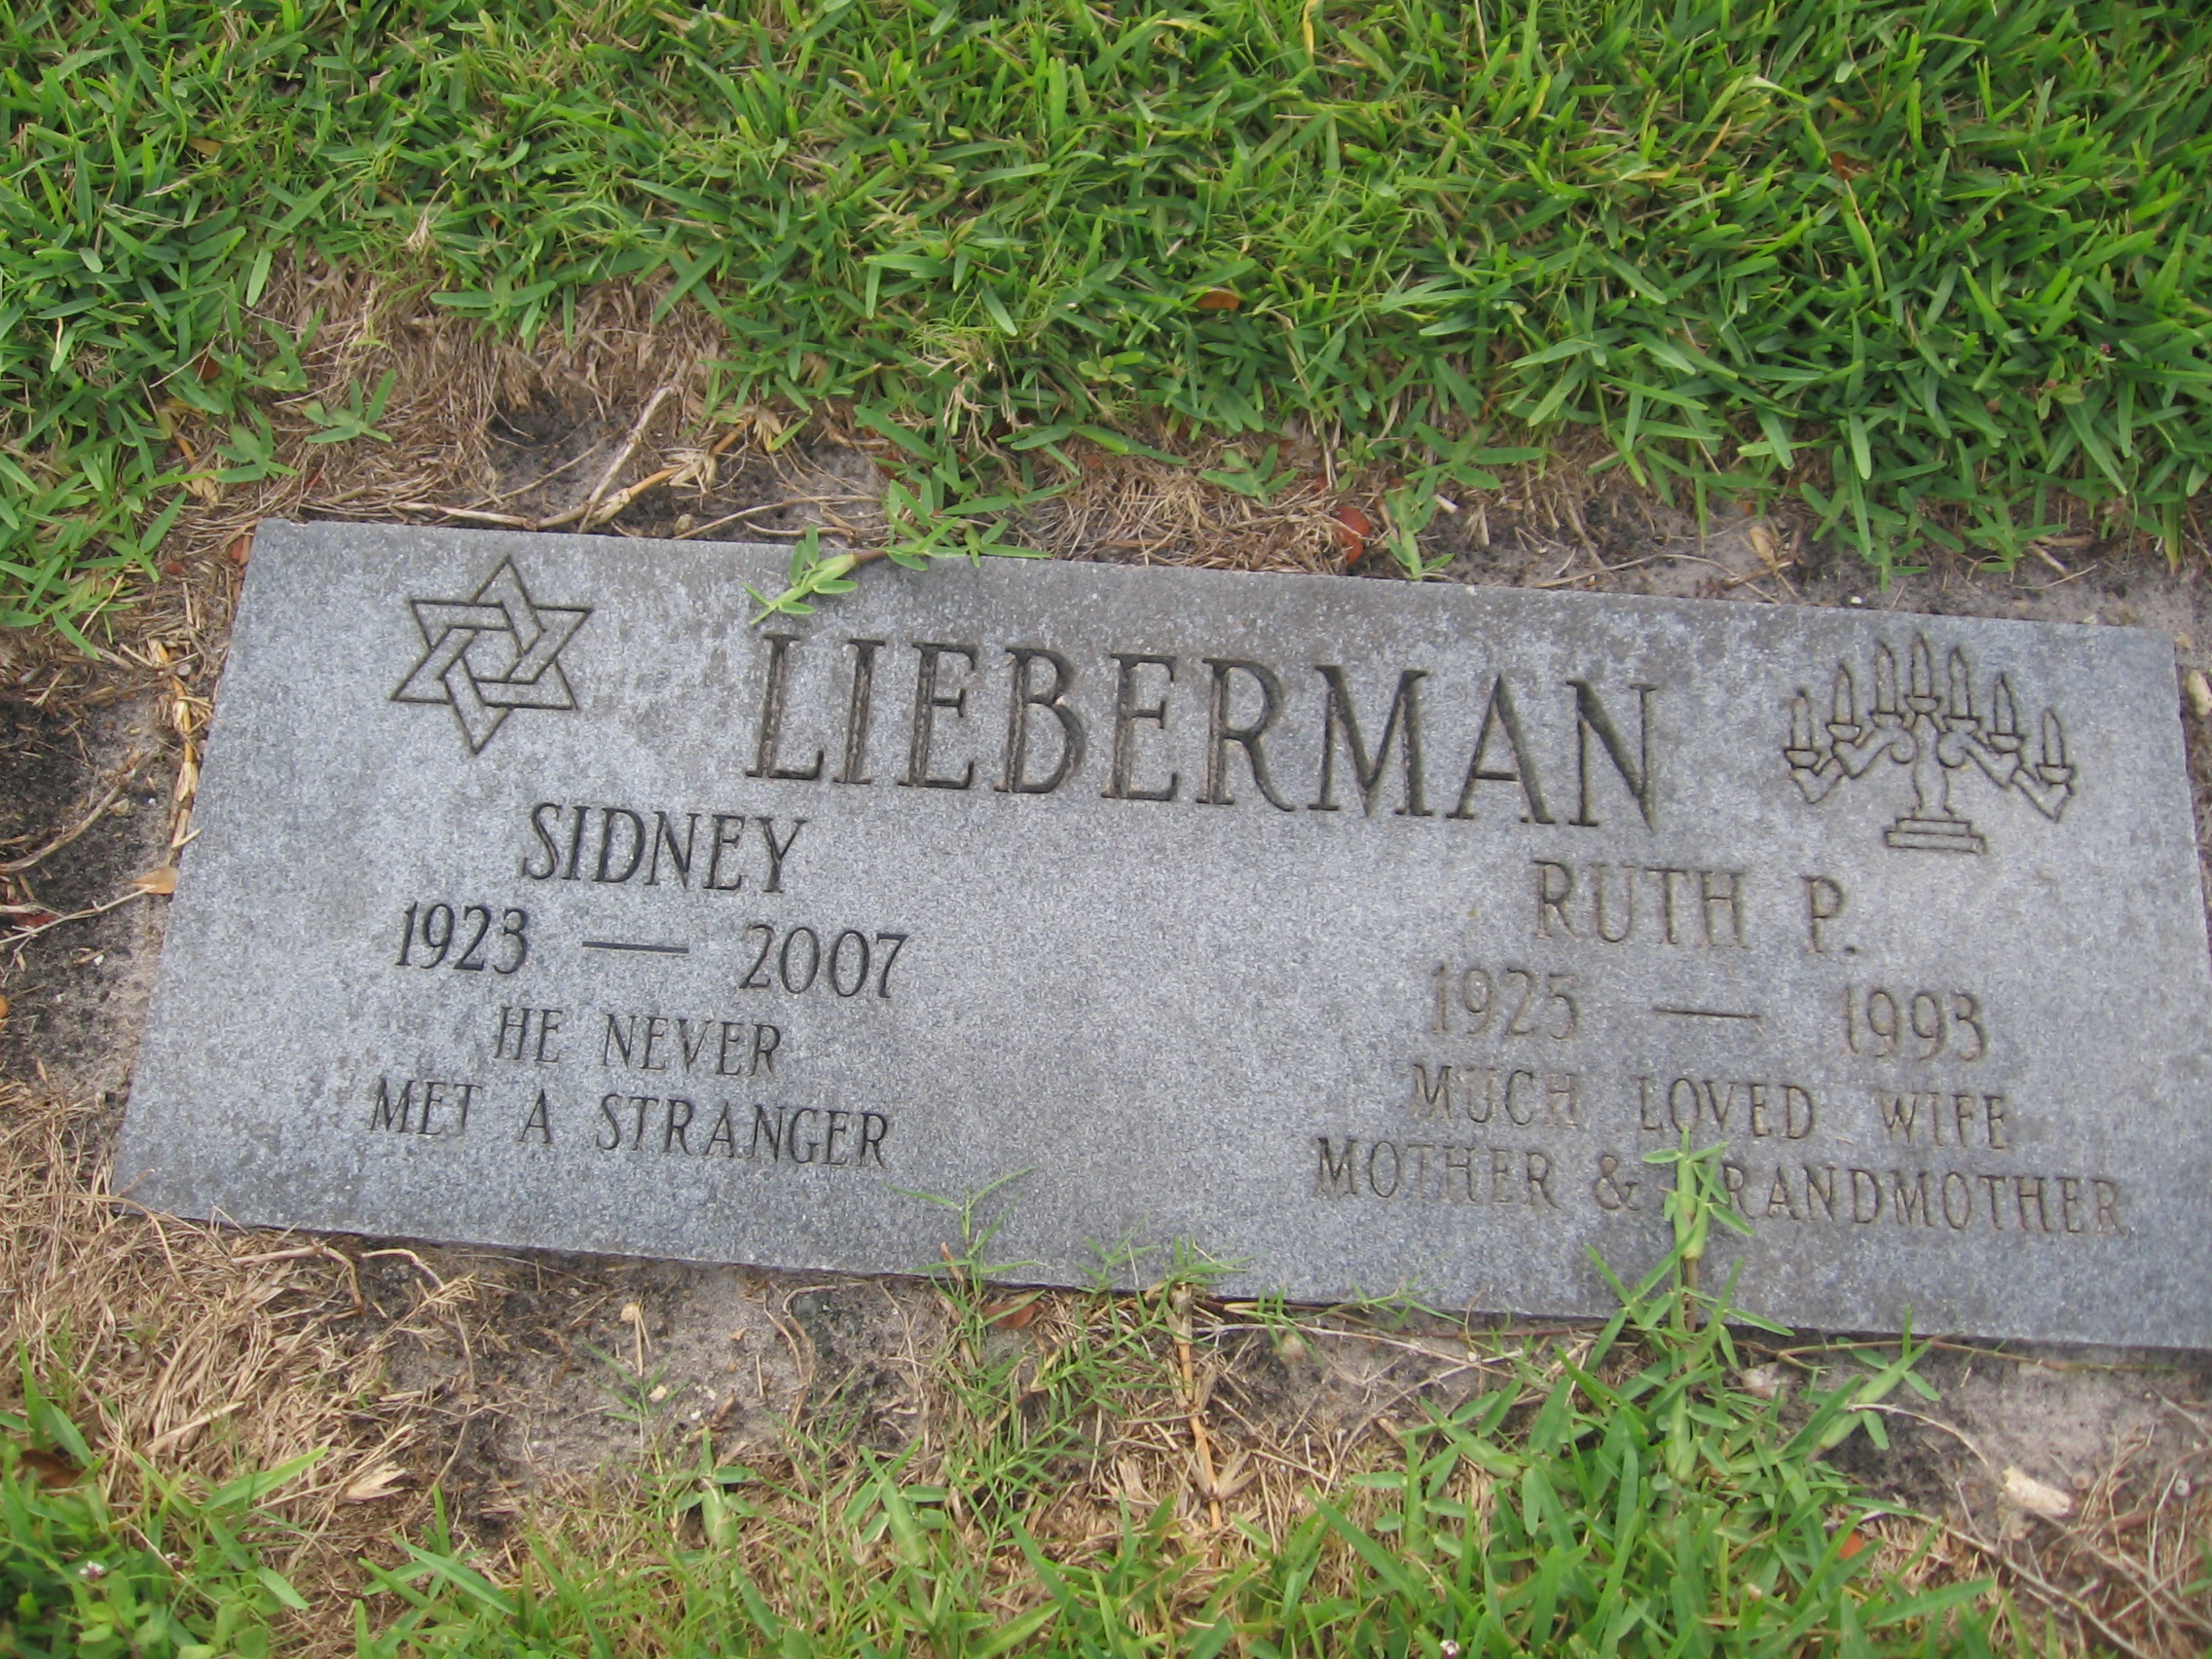 Sidney Lieberman